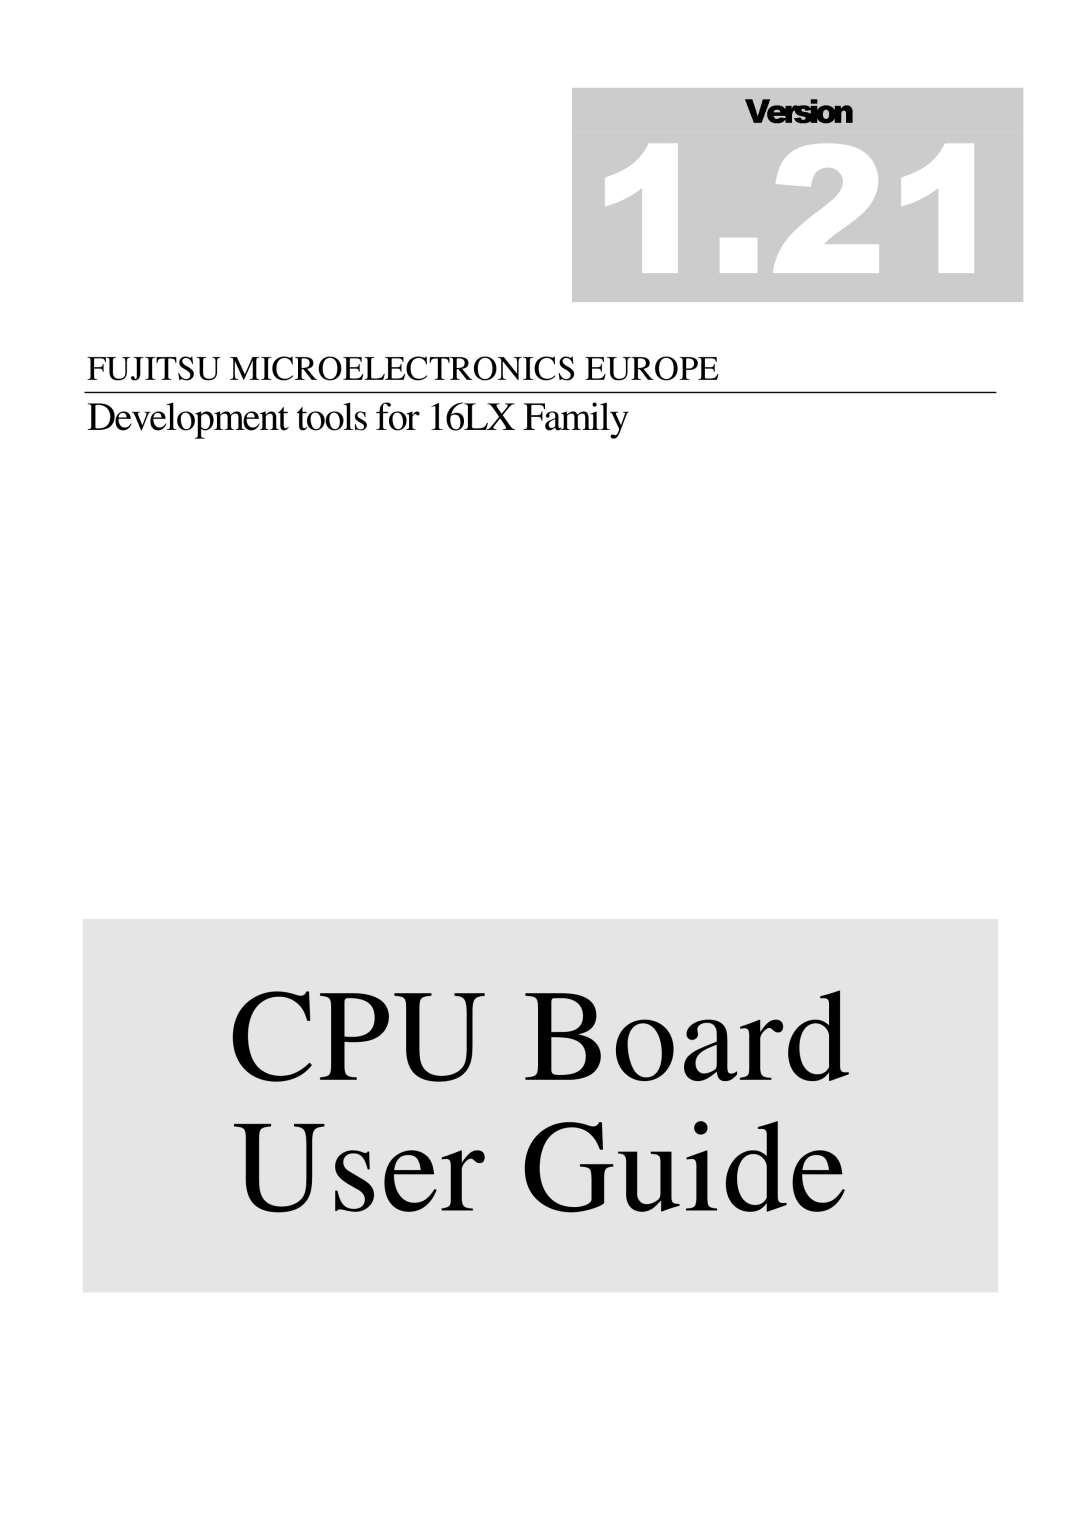 Fujitsu manual CPU Board User Guide, 9HUVLRQ, Development tools for 16LX Family, Fujitsu Microelectronics Europe 